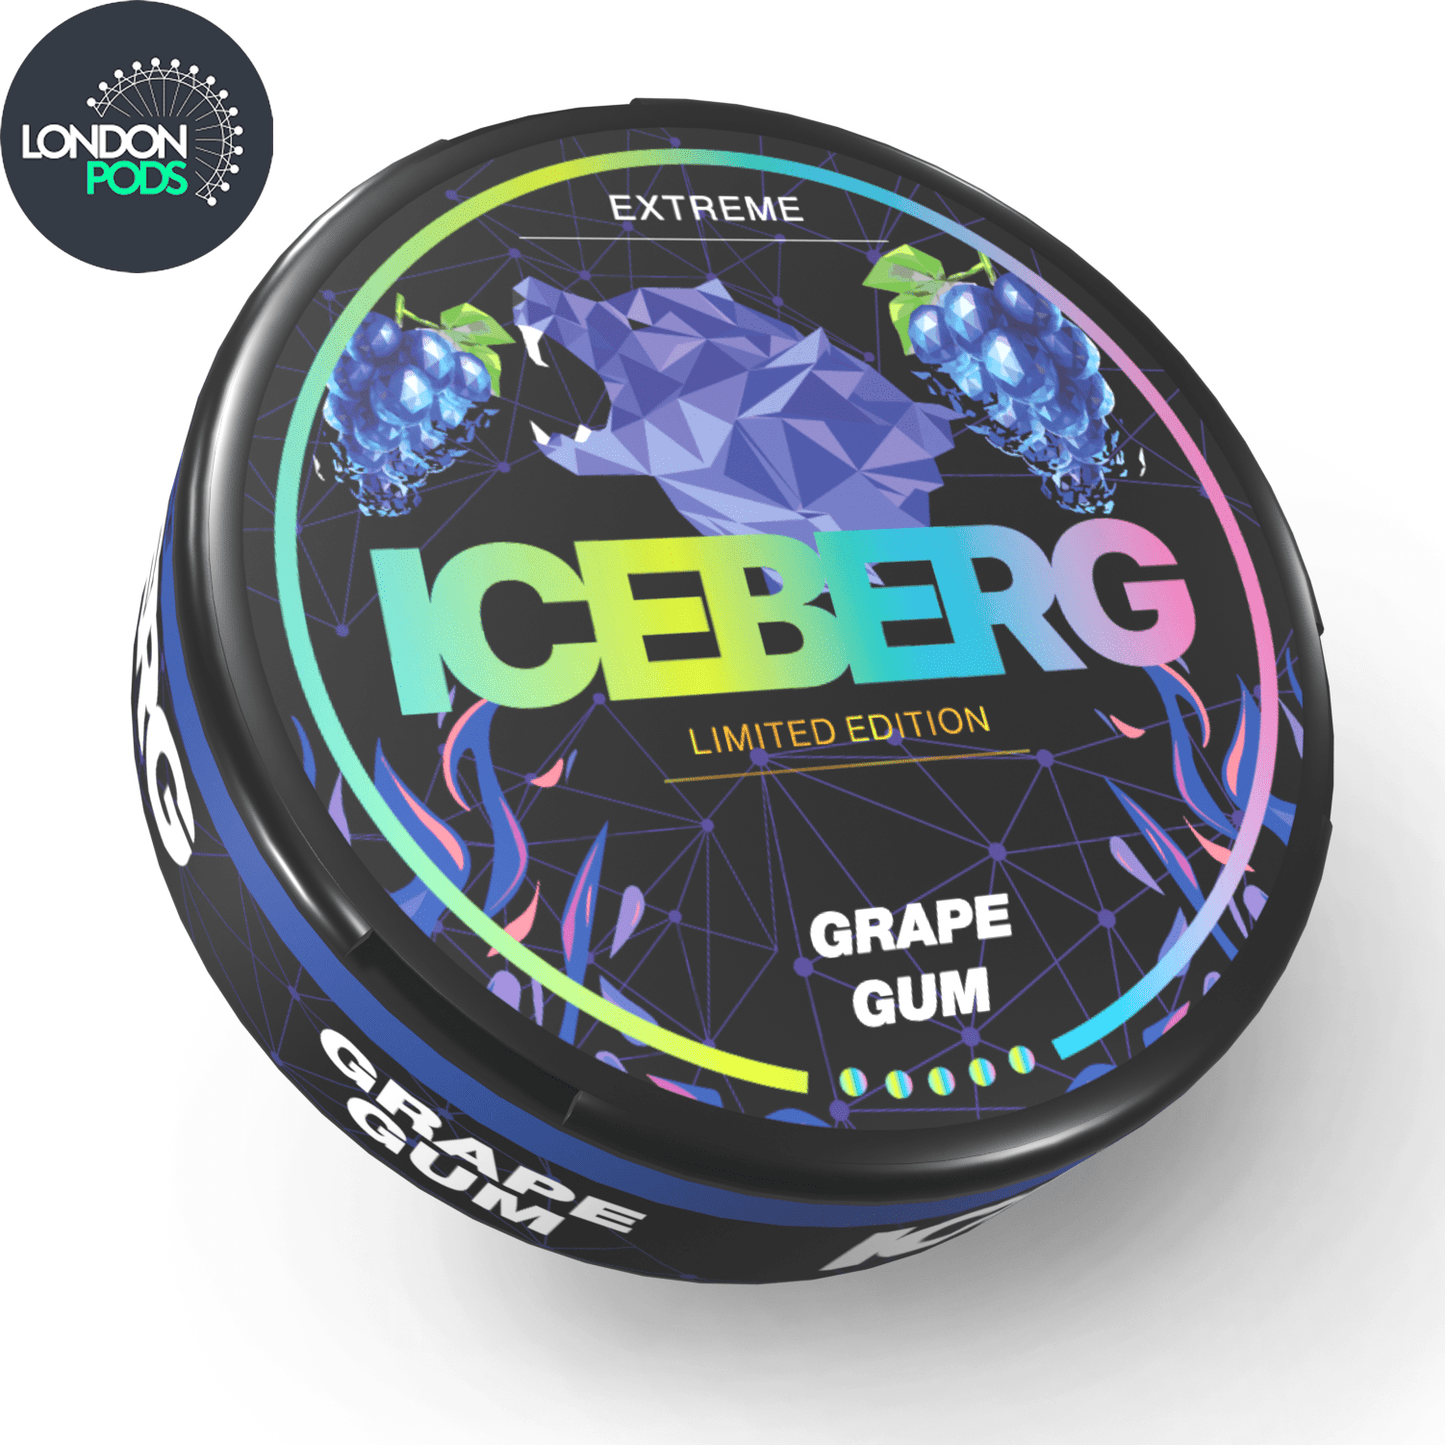 Iceberg Limited Edition Grape Gum Nicotine Pouches, Snus 150mg/g